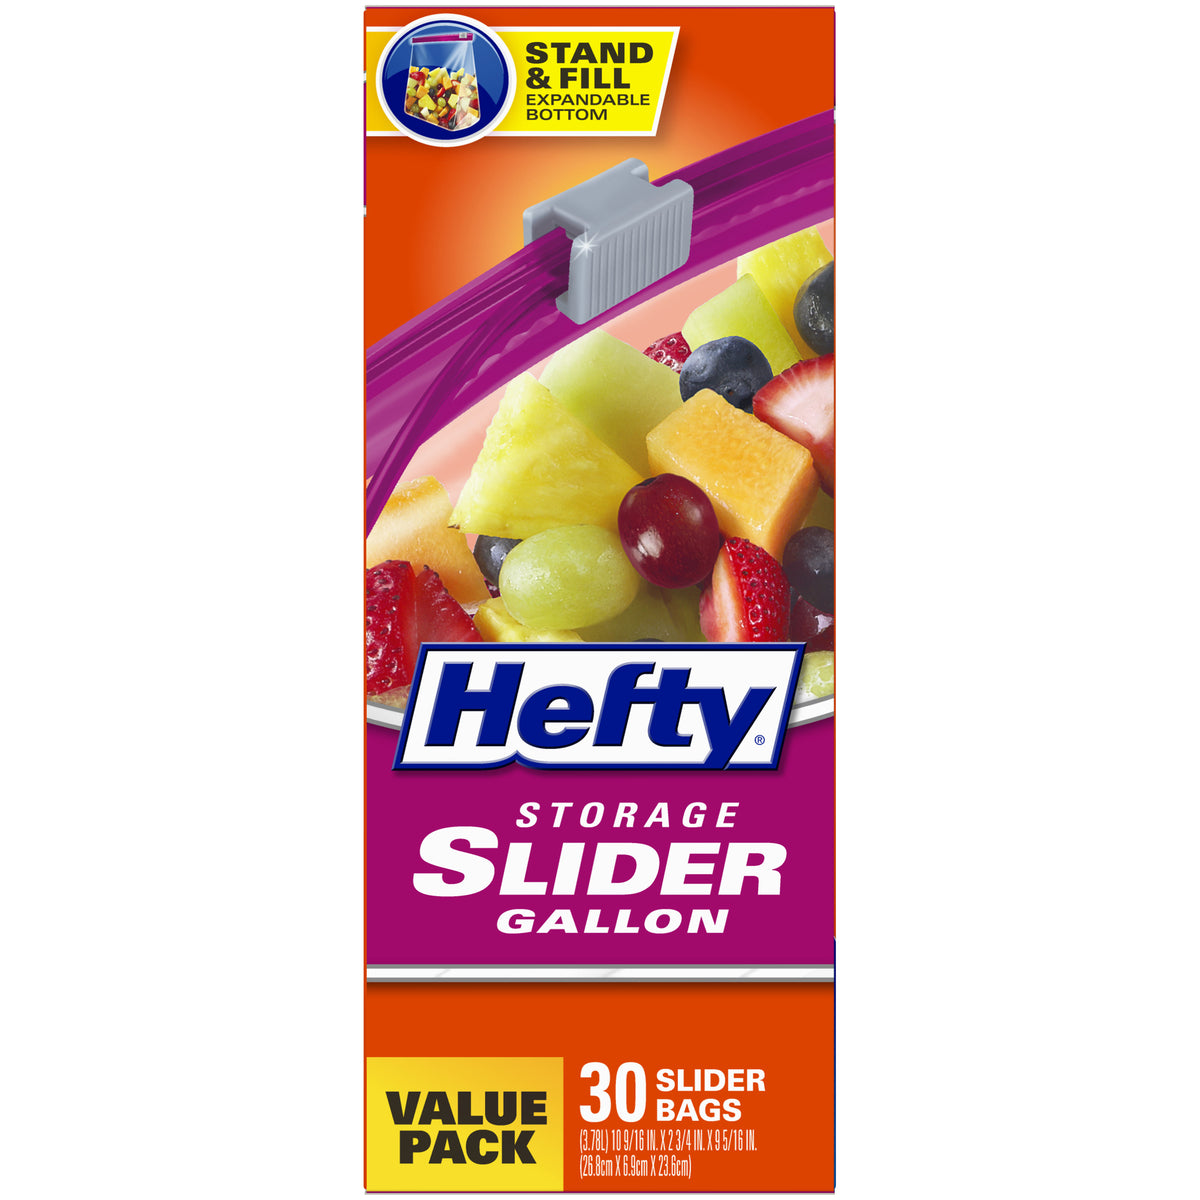 Hefty Slider Storage Bag, Gallon, 30 Ct (Pack of 4) 